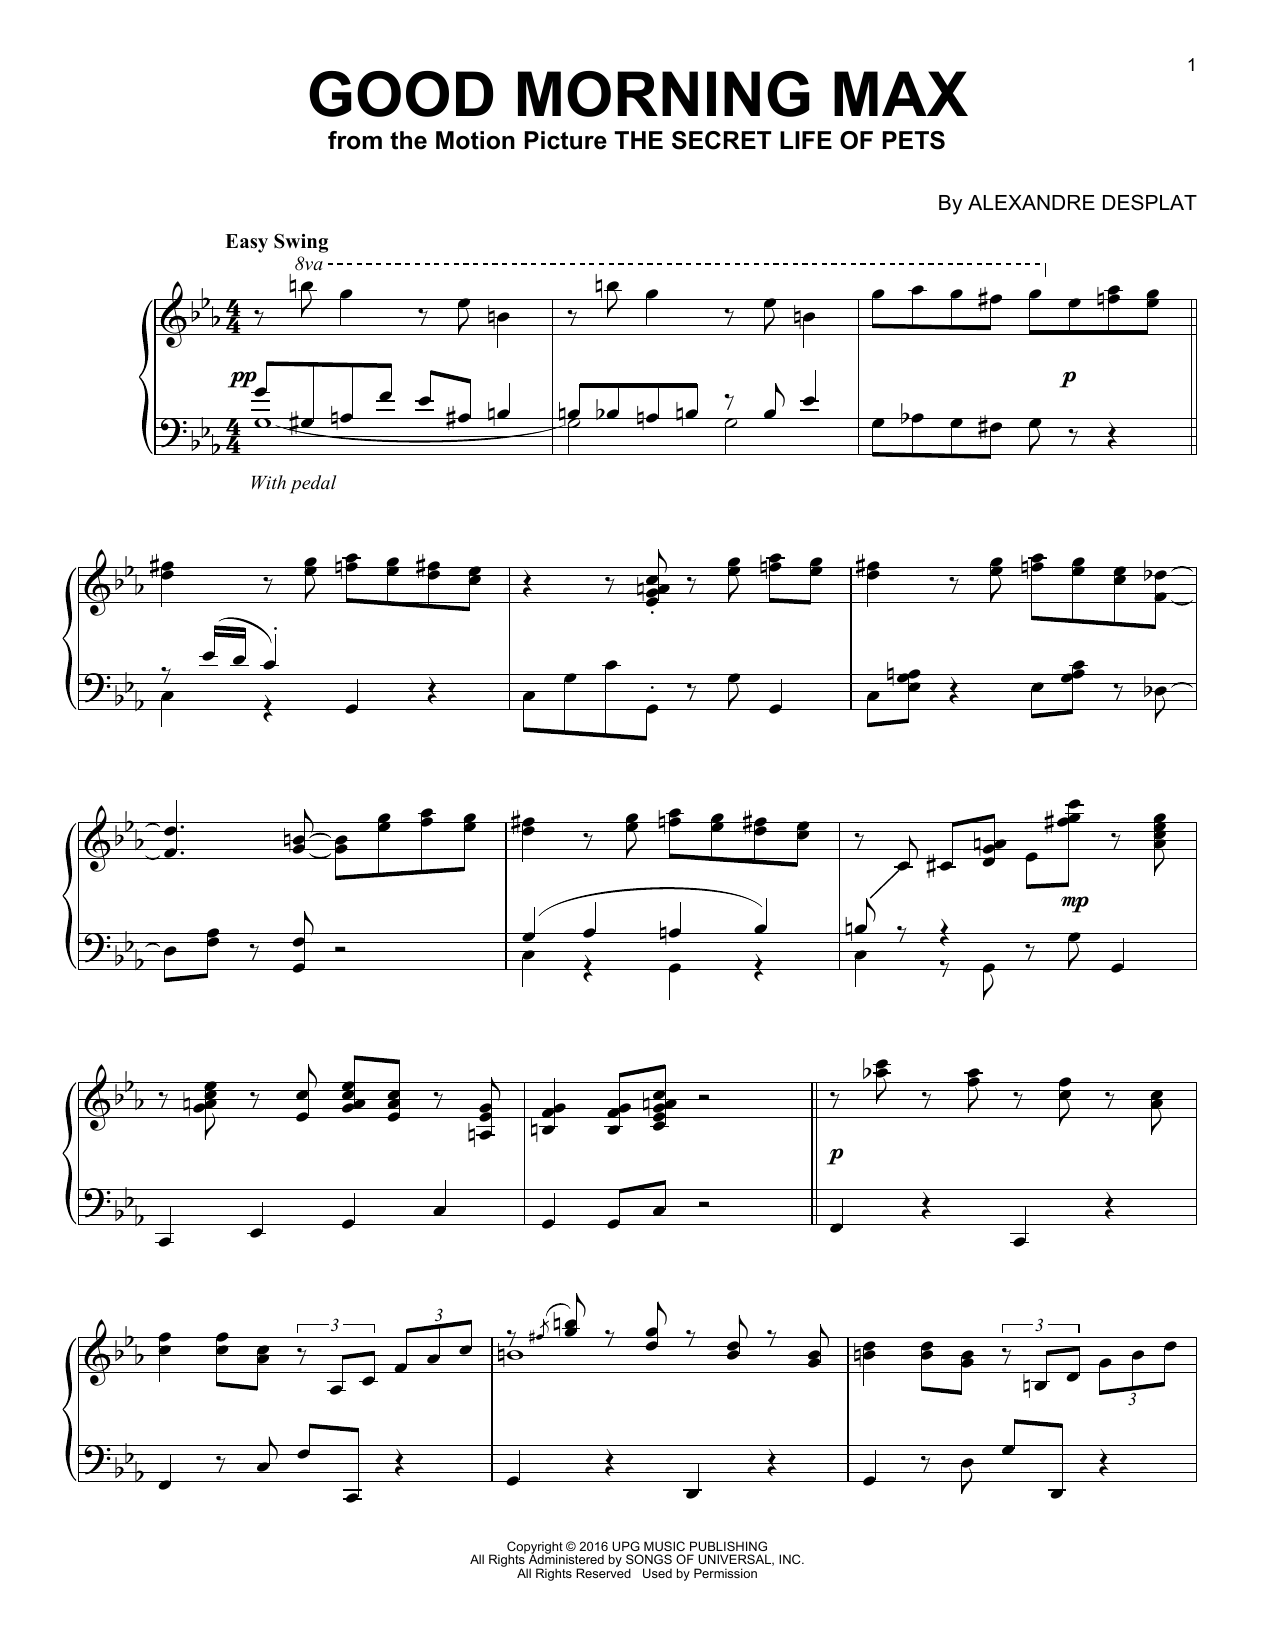 Alexandre Desplat Good Morning Max Sheet Music Notes & Chords for Piano - Download or Print PDF